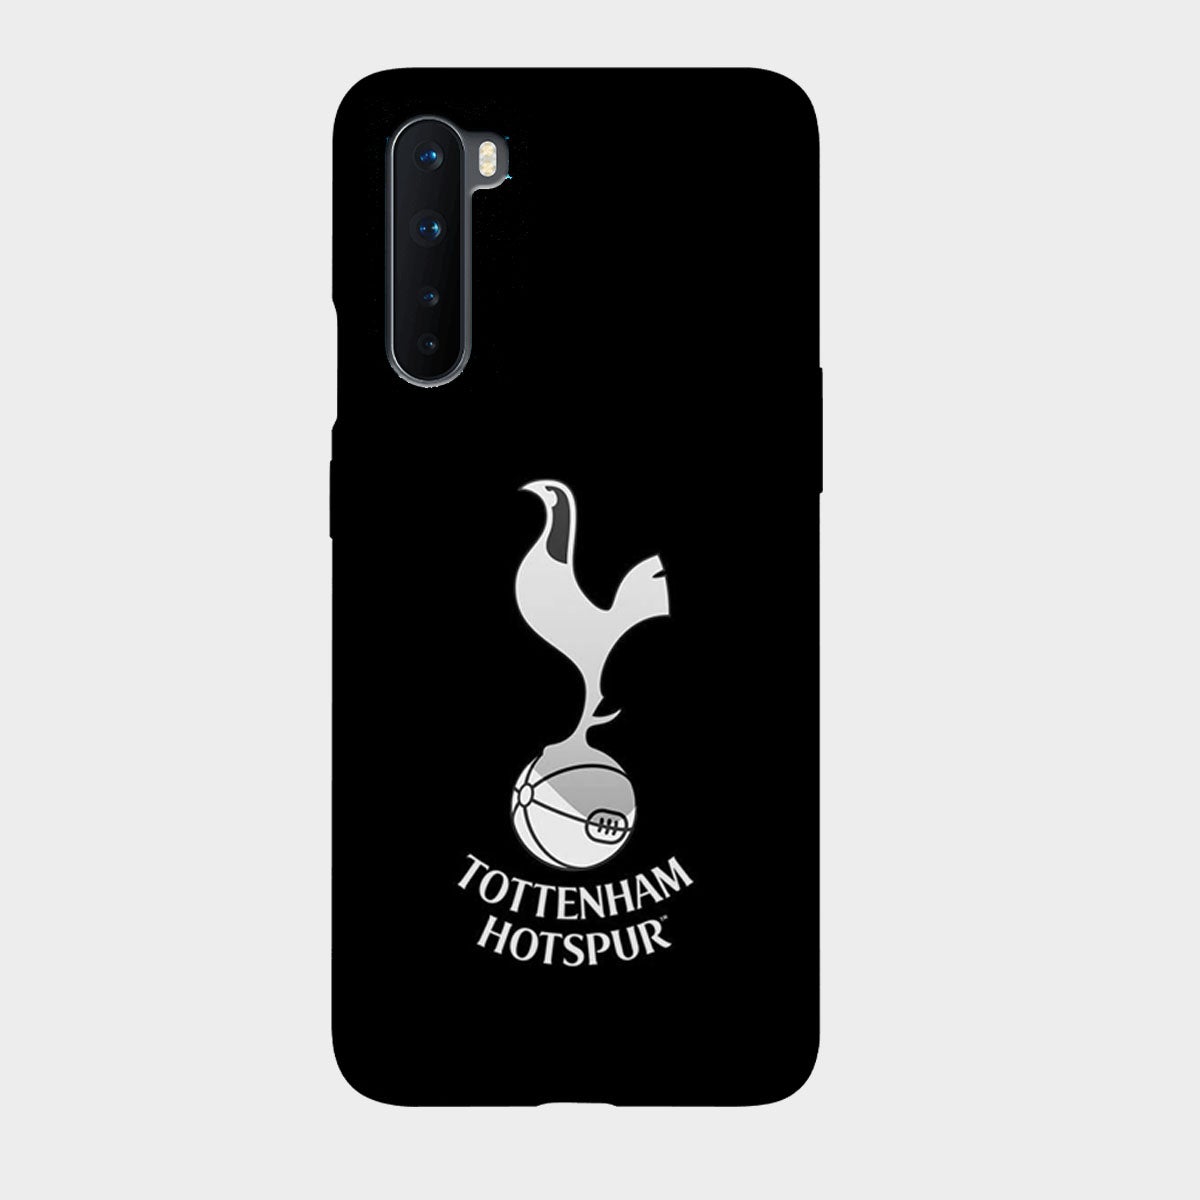 Tottenham Hotspurs - Black - Mobile Phone Cover - Hard Case - OnePlus